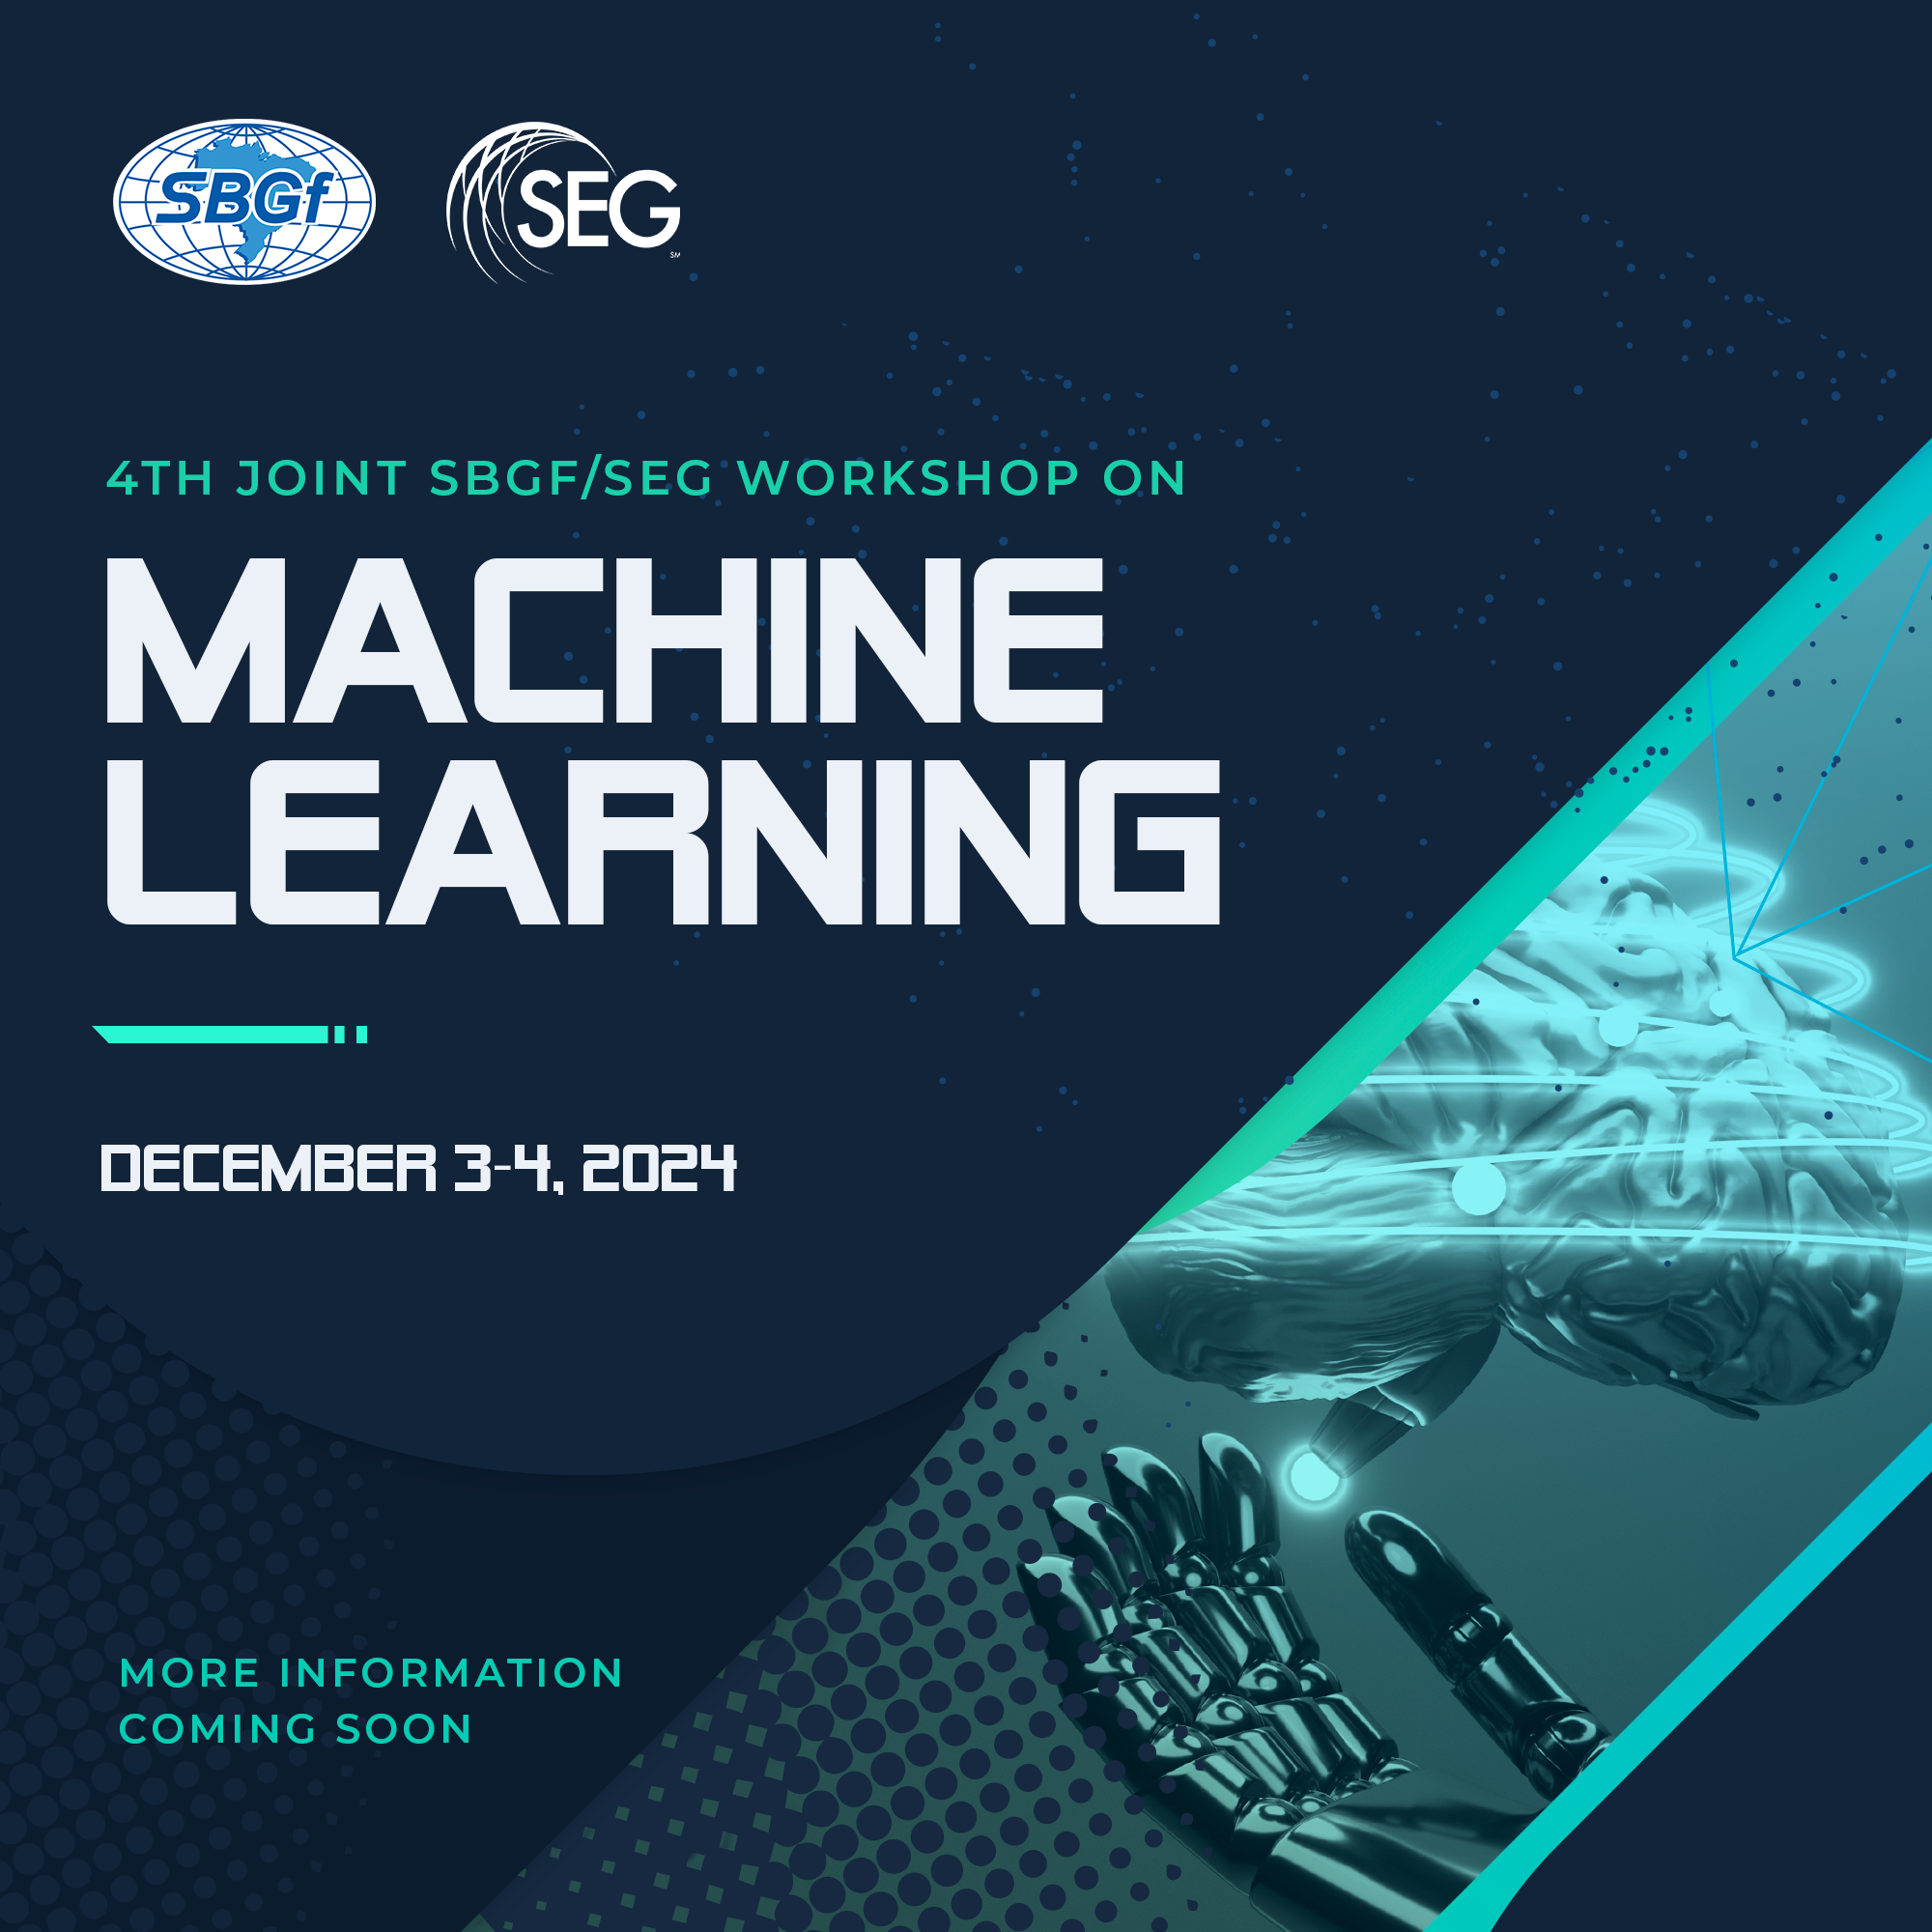 banner_4th Joint SBGf/SEG Workshop on Machine Learning